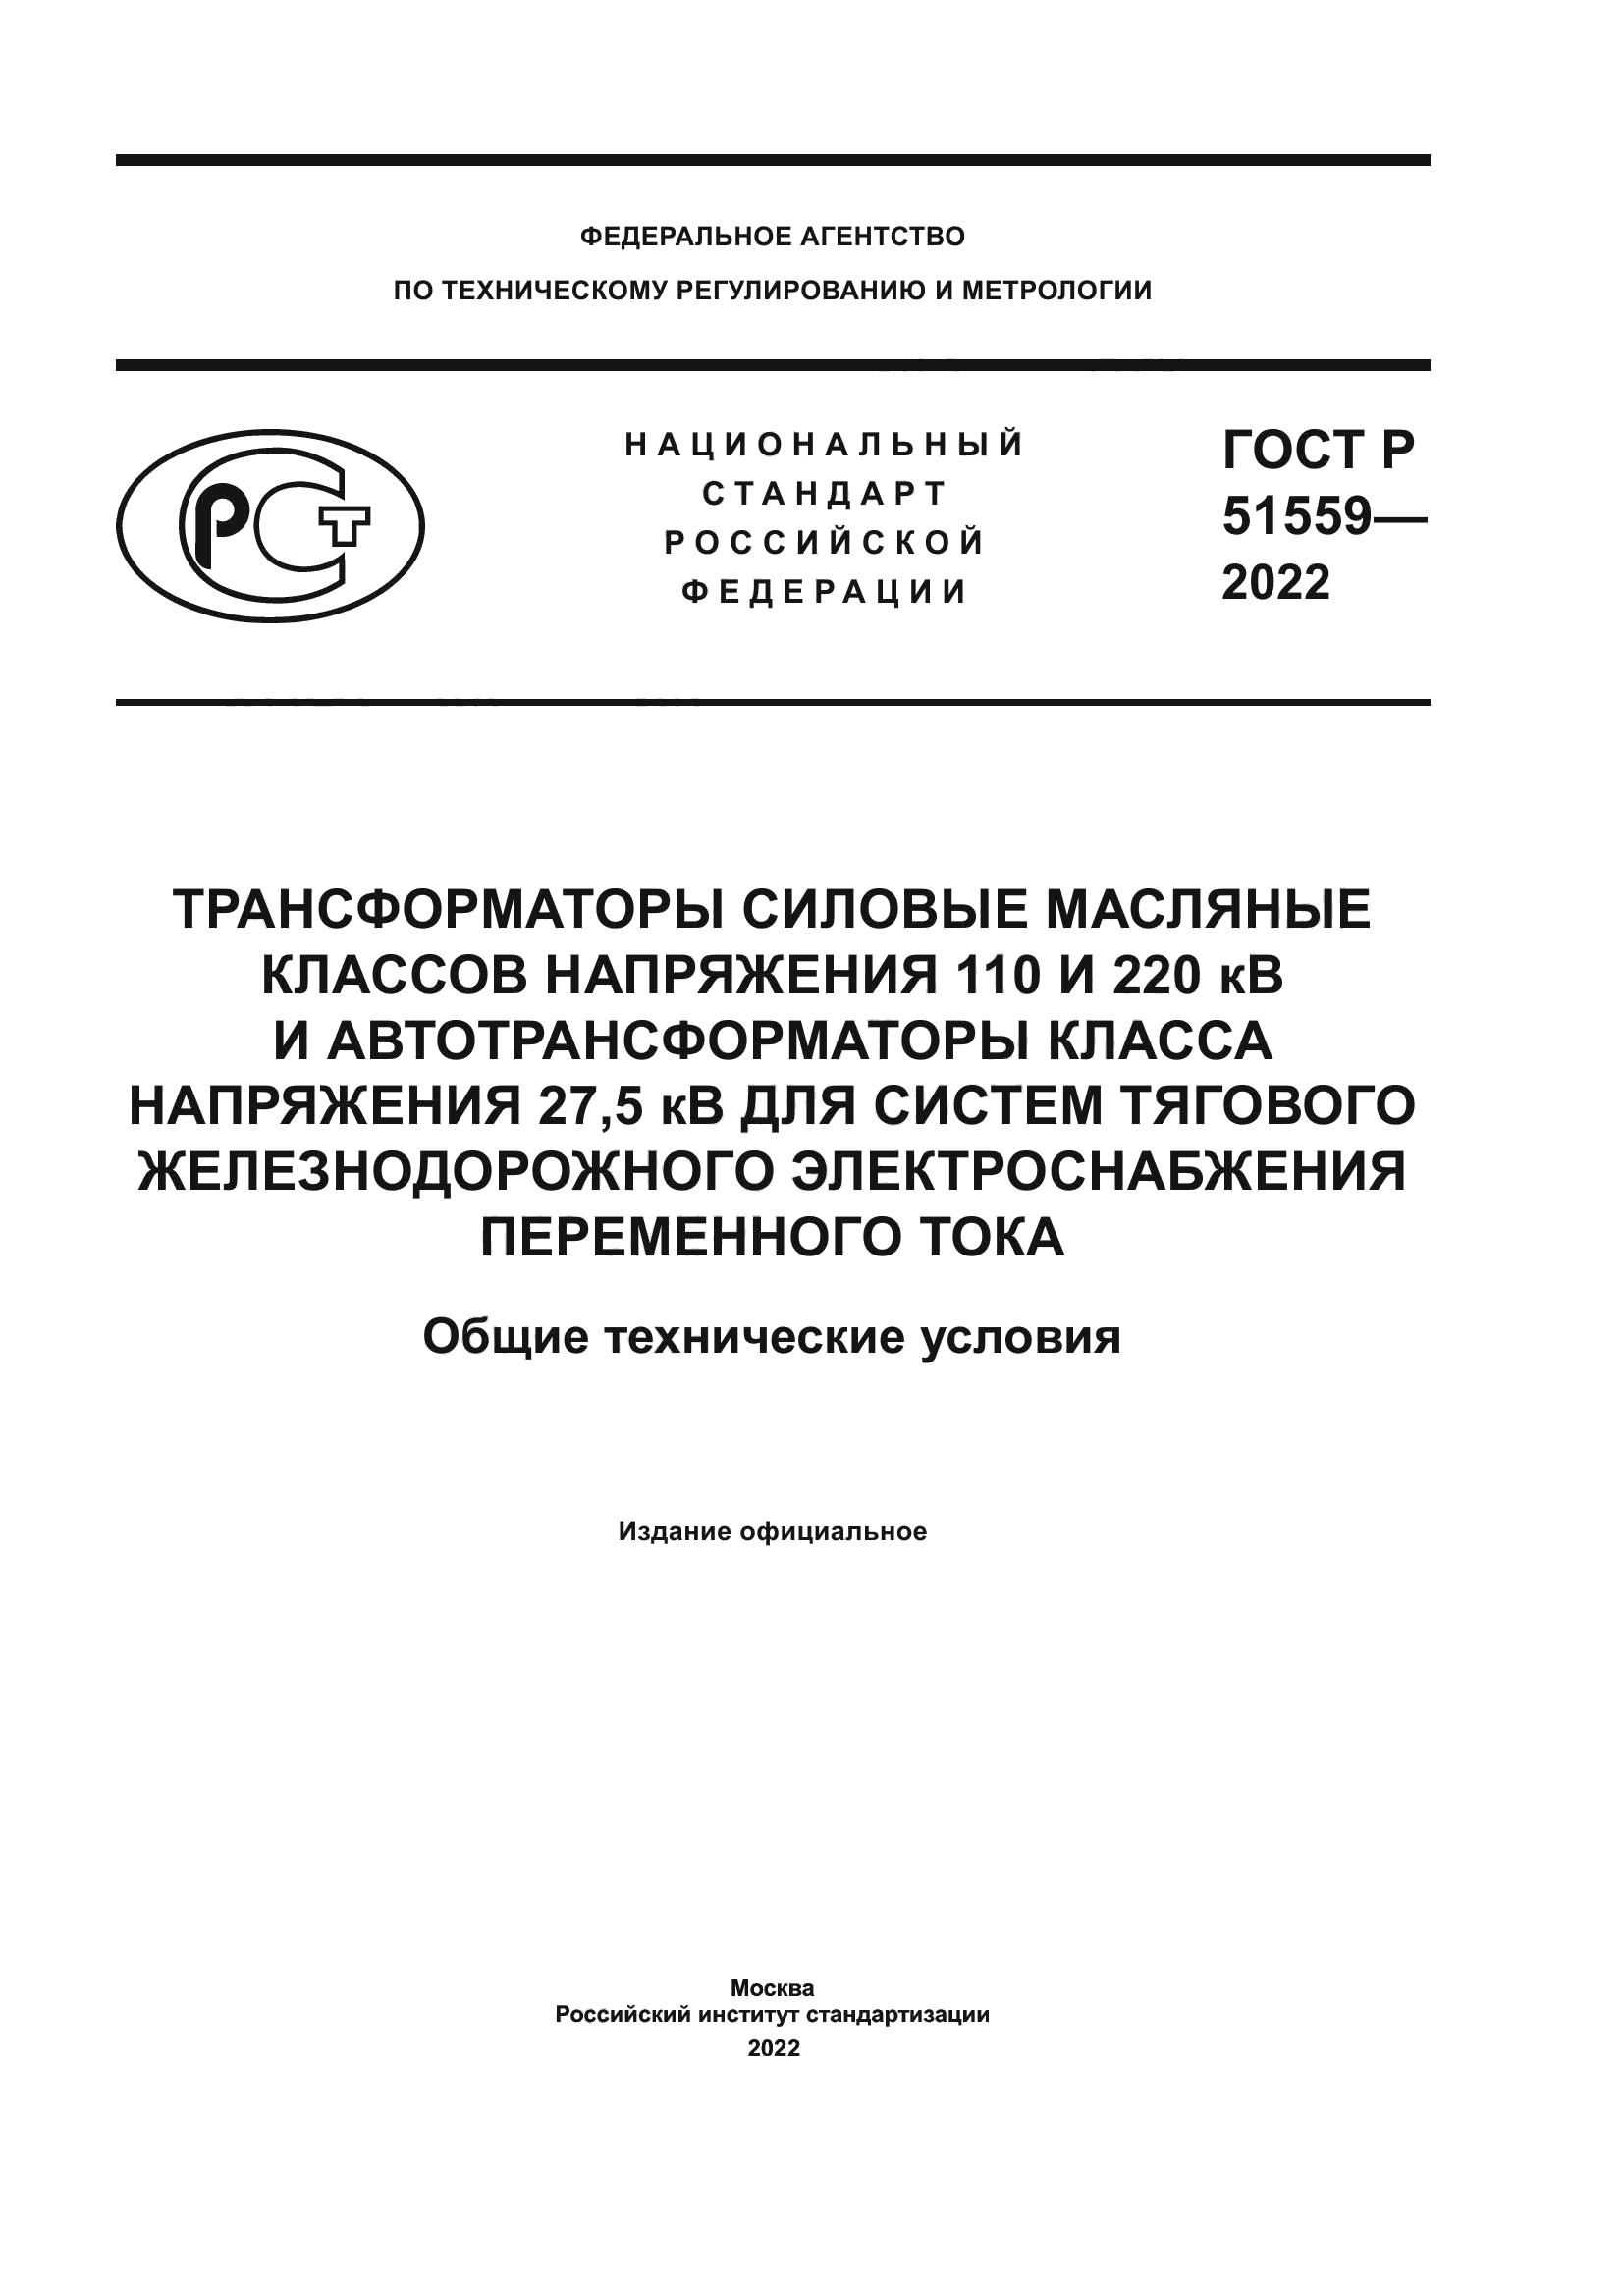 ГОСТ Р 51559-2022